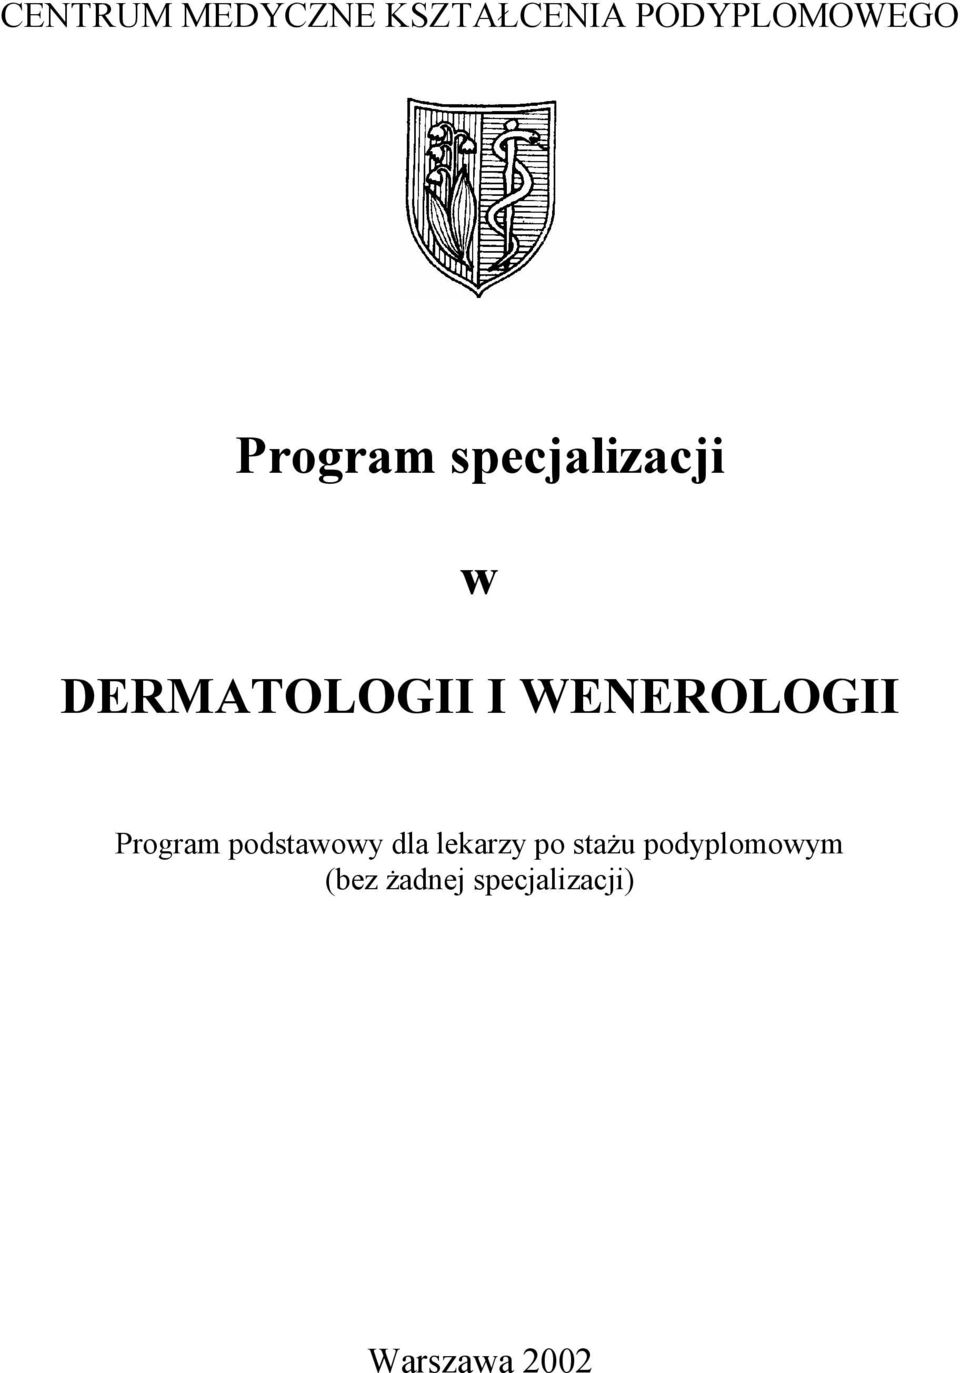 DERMATOLOGII I WENEROLOGII Program